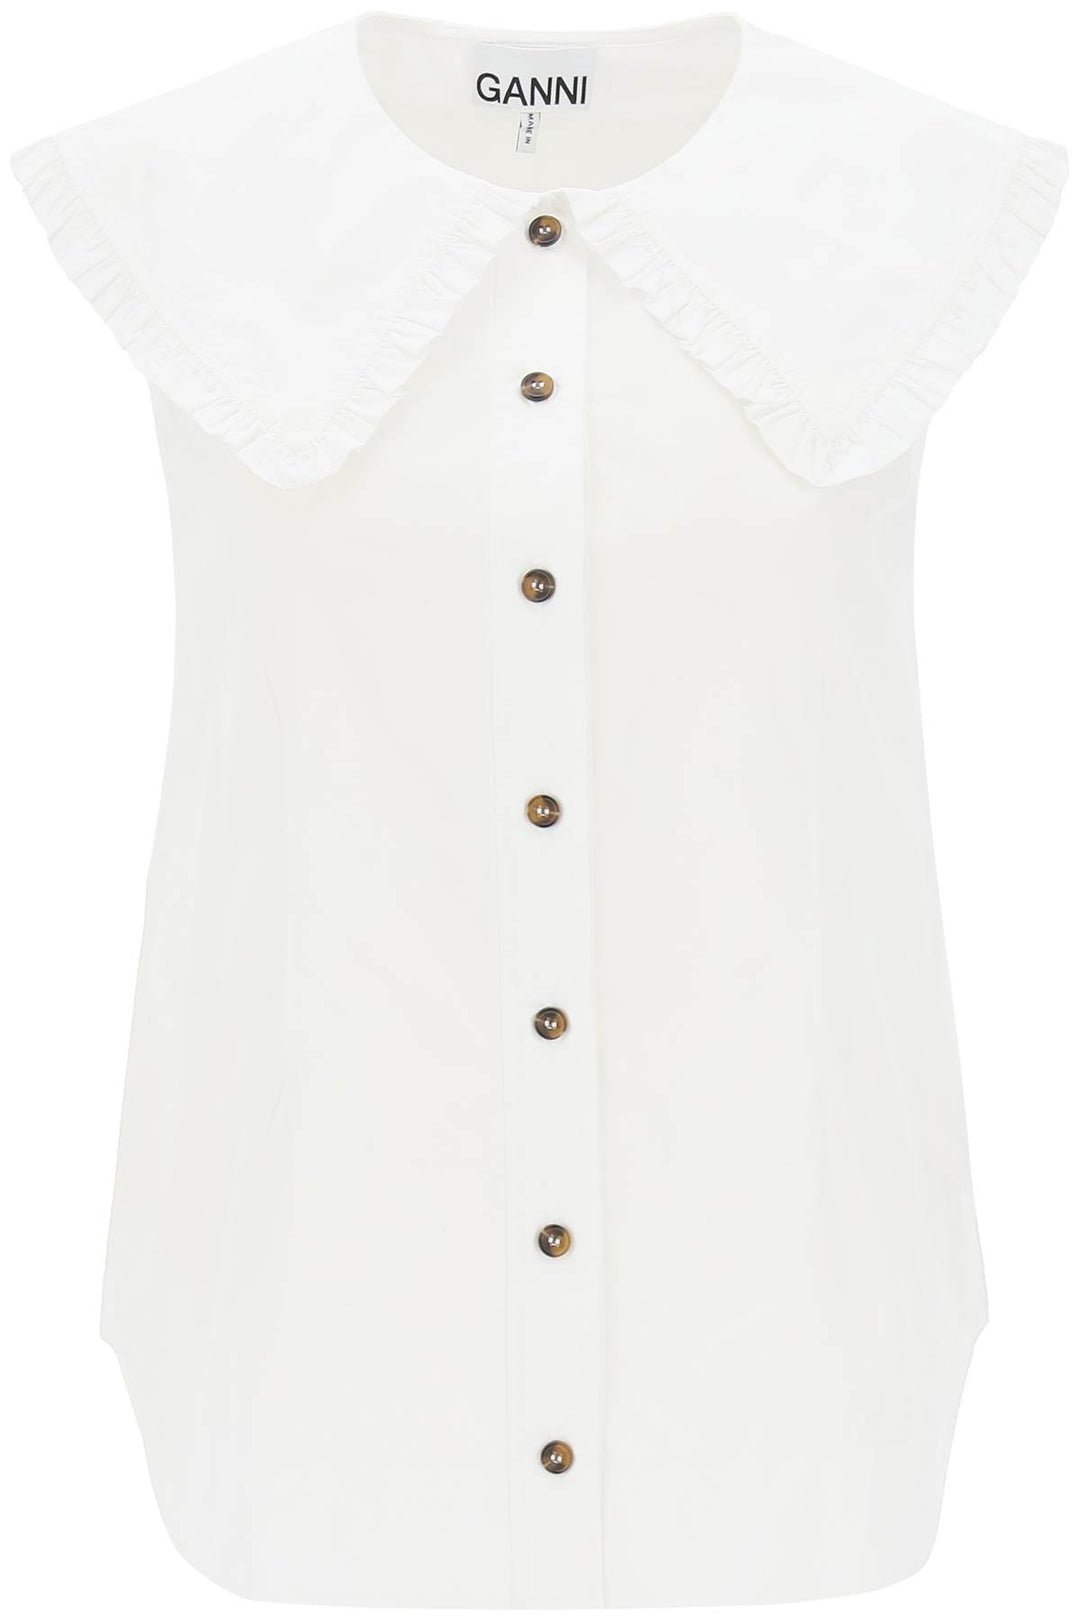 Ganni sleeveless shirt with maxi collar-0